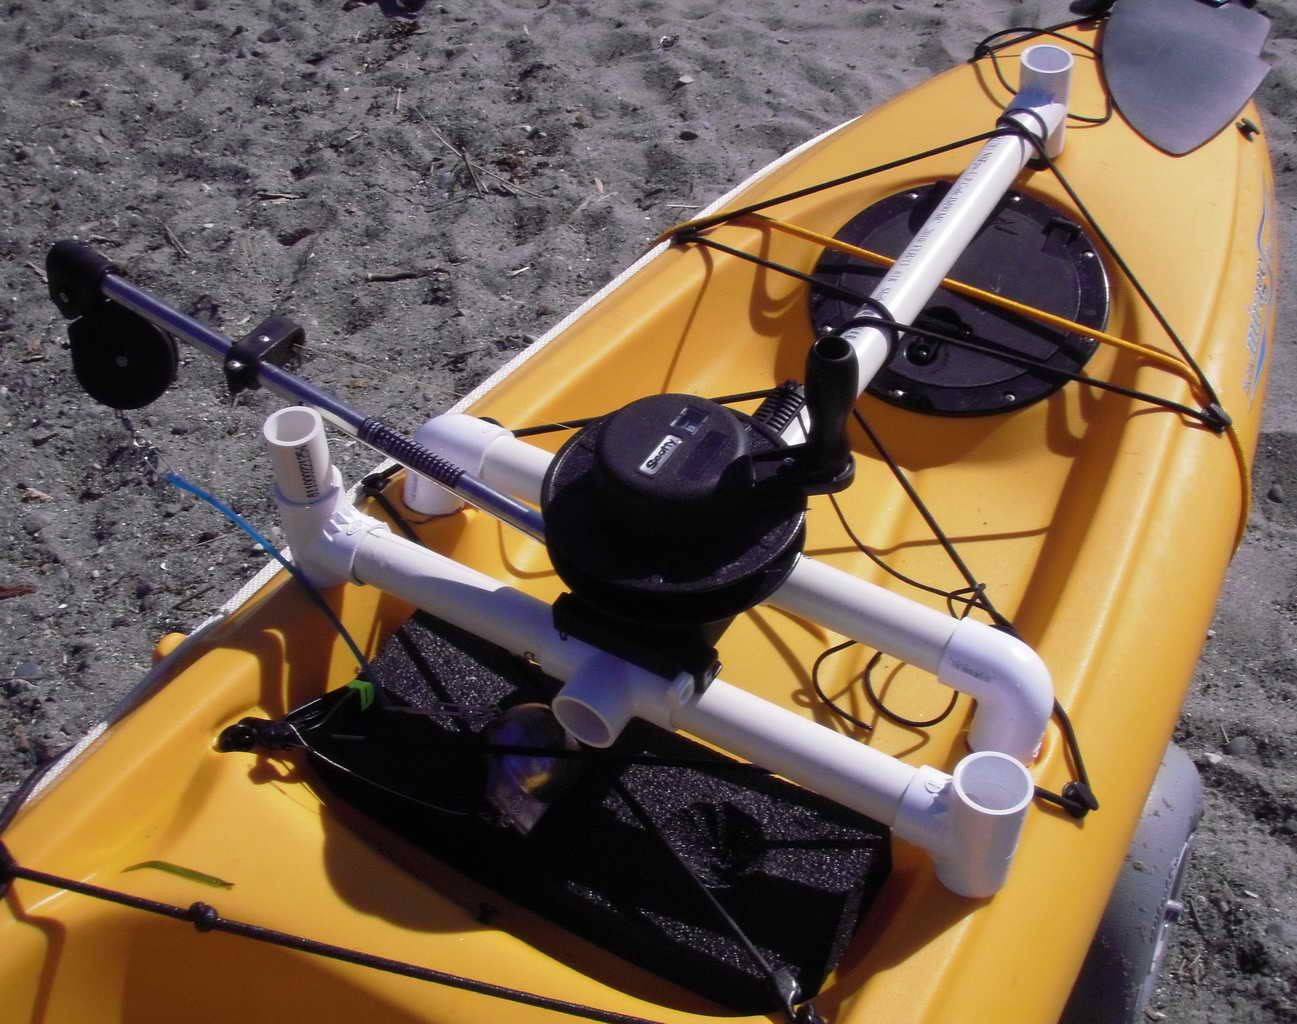 Best ideas about DIY Kayak Accessories
. Save or Pin Diy down rigger for Kayak Fishing Kayaking Now.